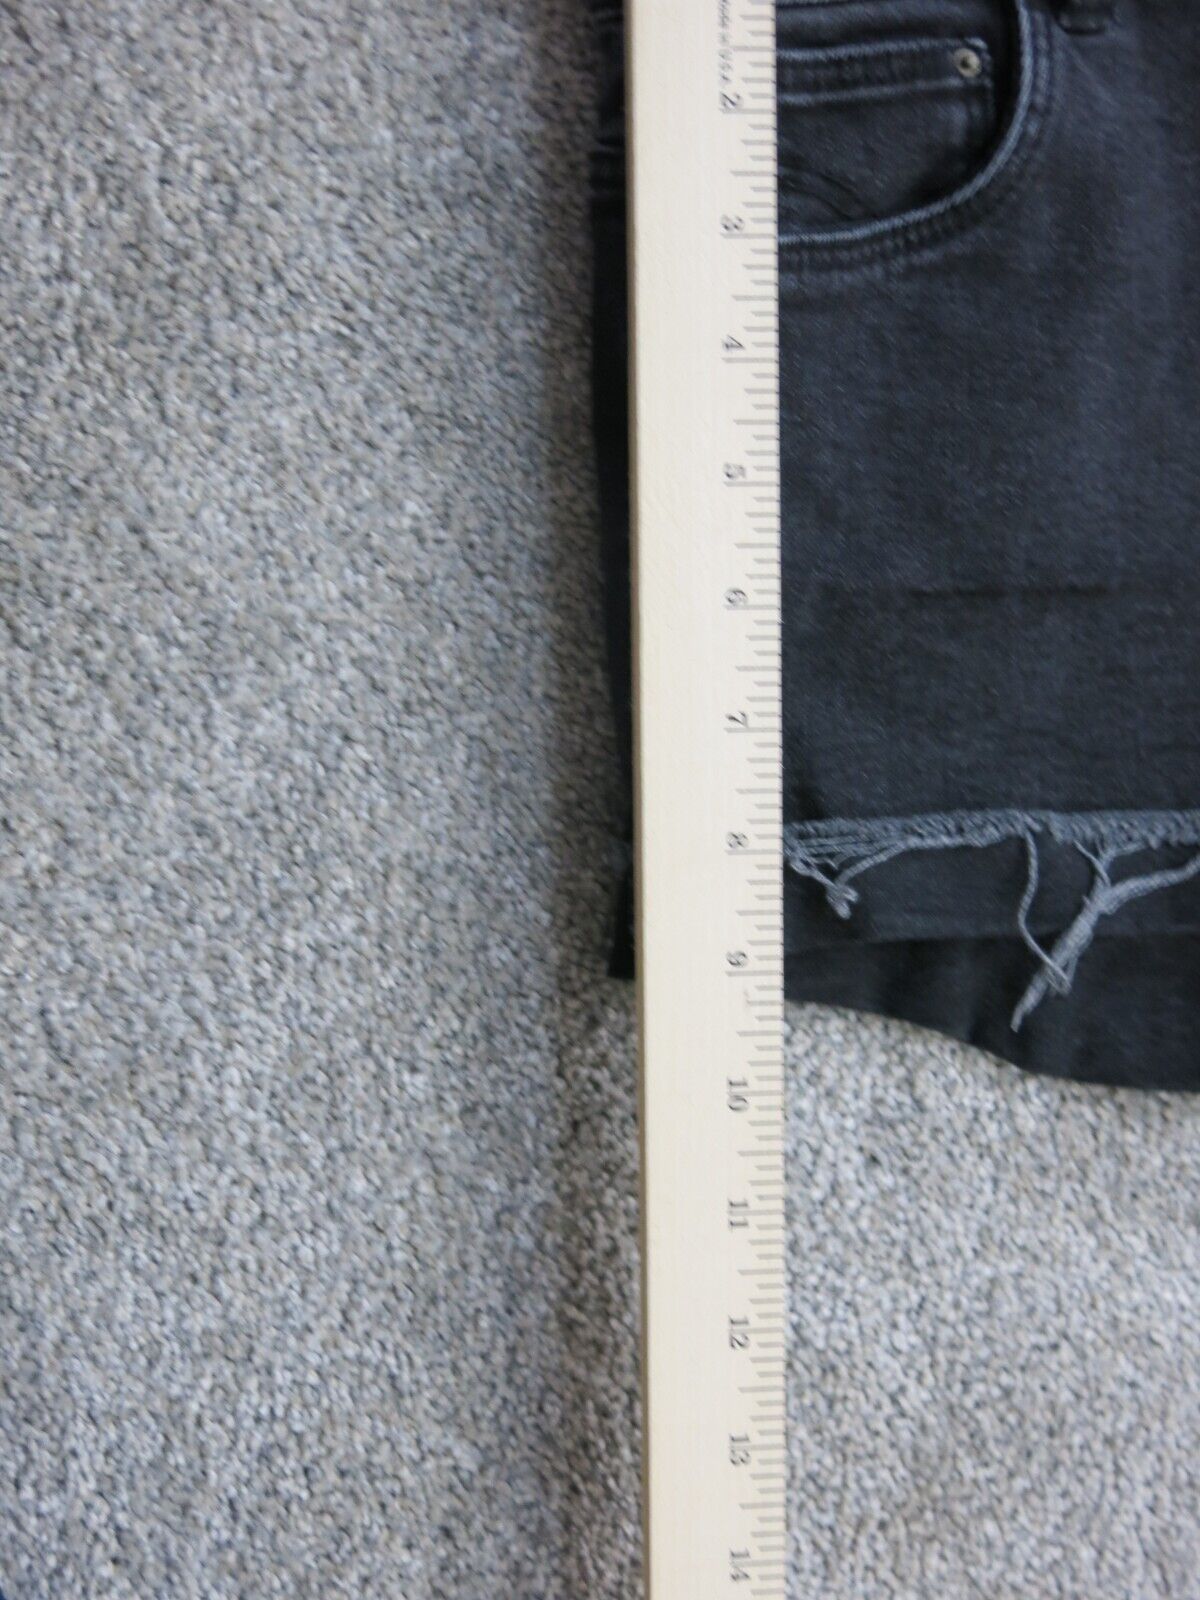 Zara Womens Trafaluc Denimwear Cut Off Jeans Shorts Mid Rise Black Size US 4